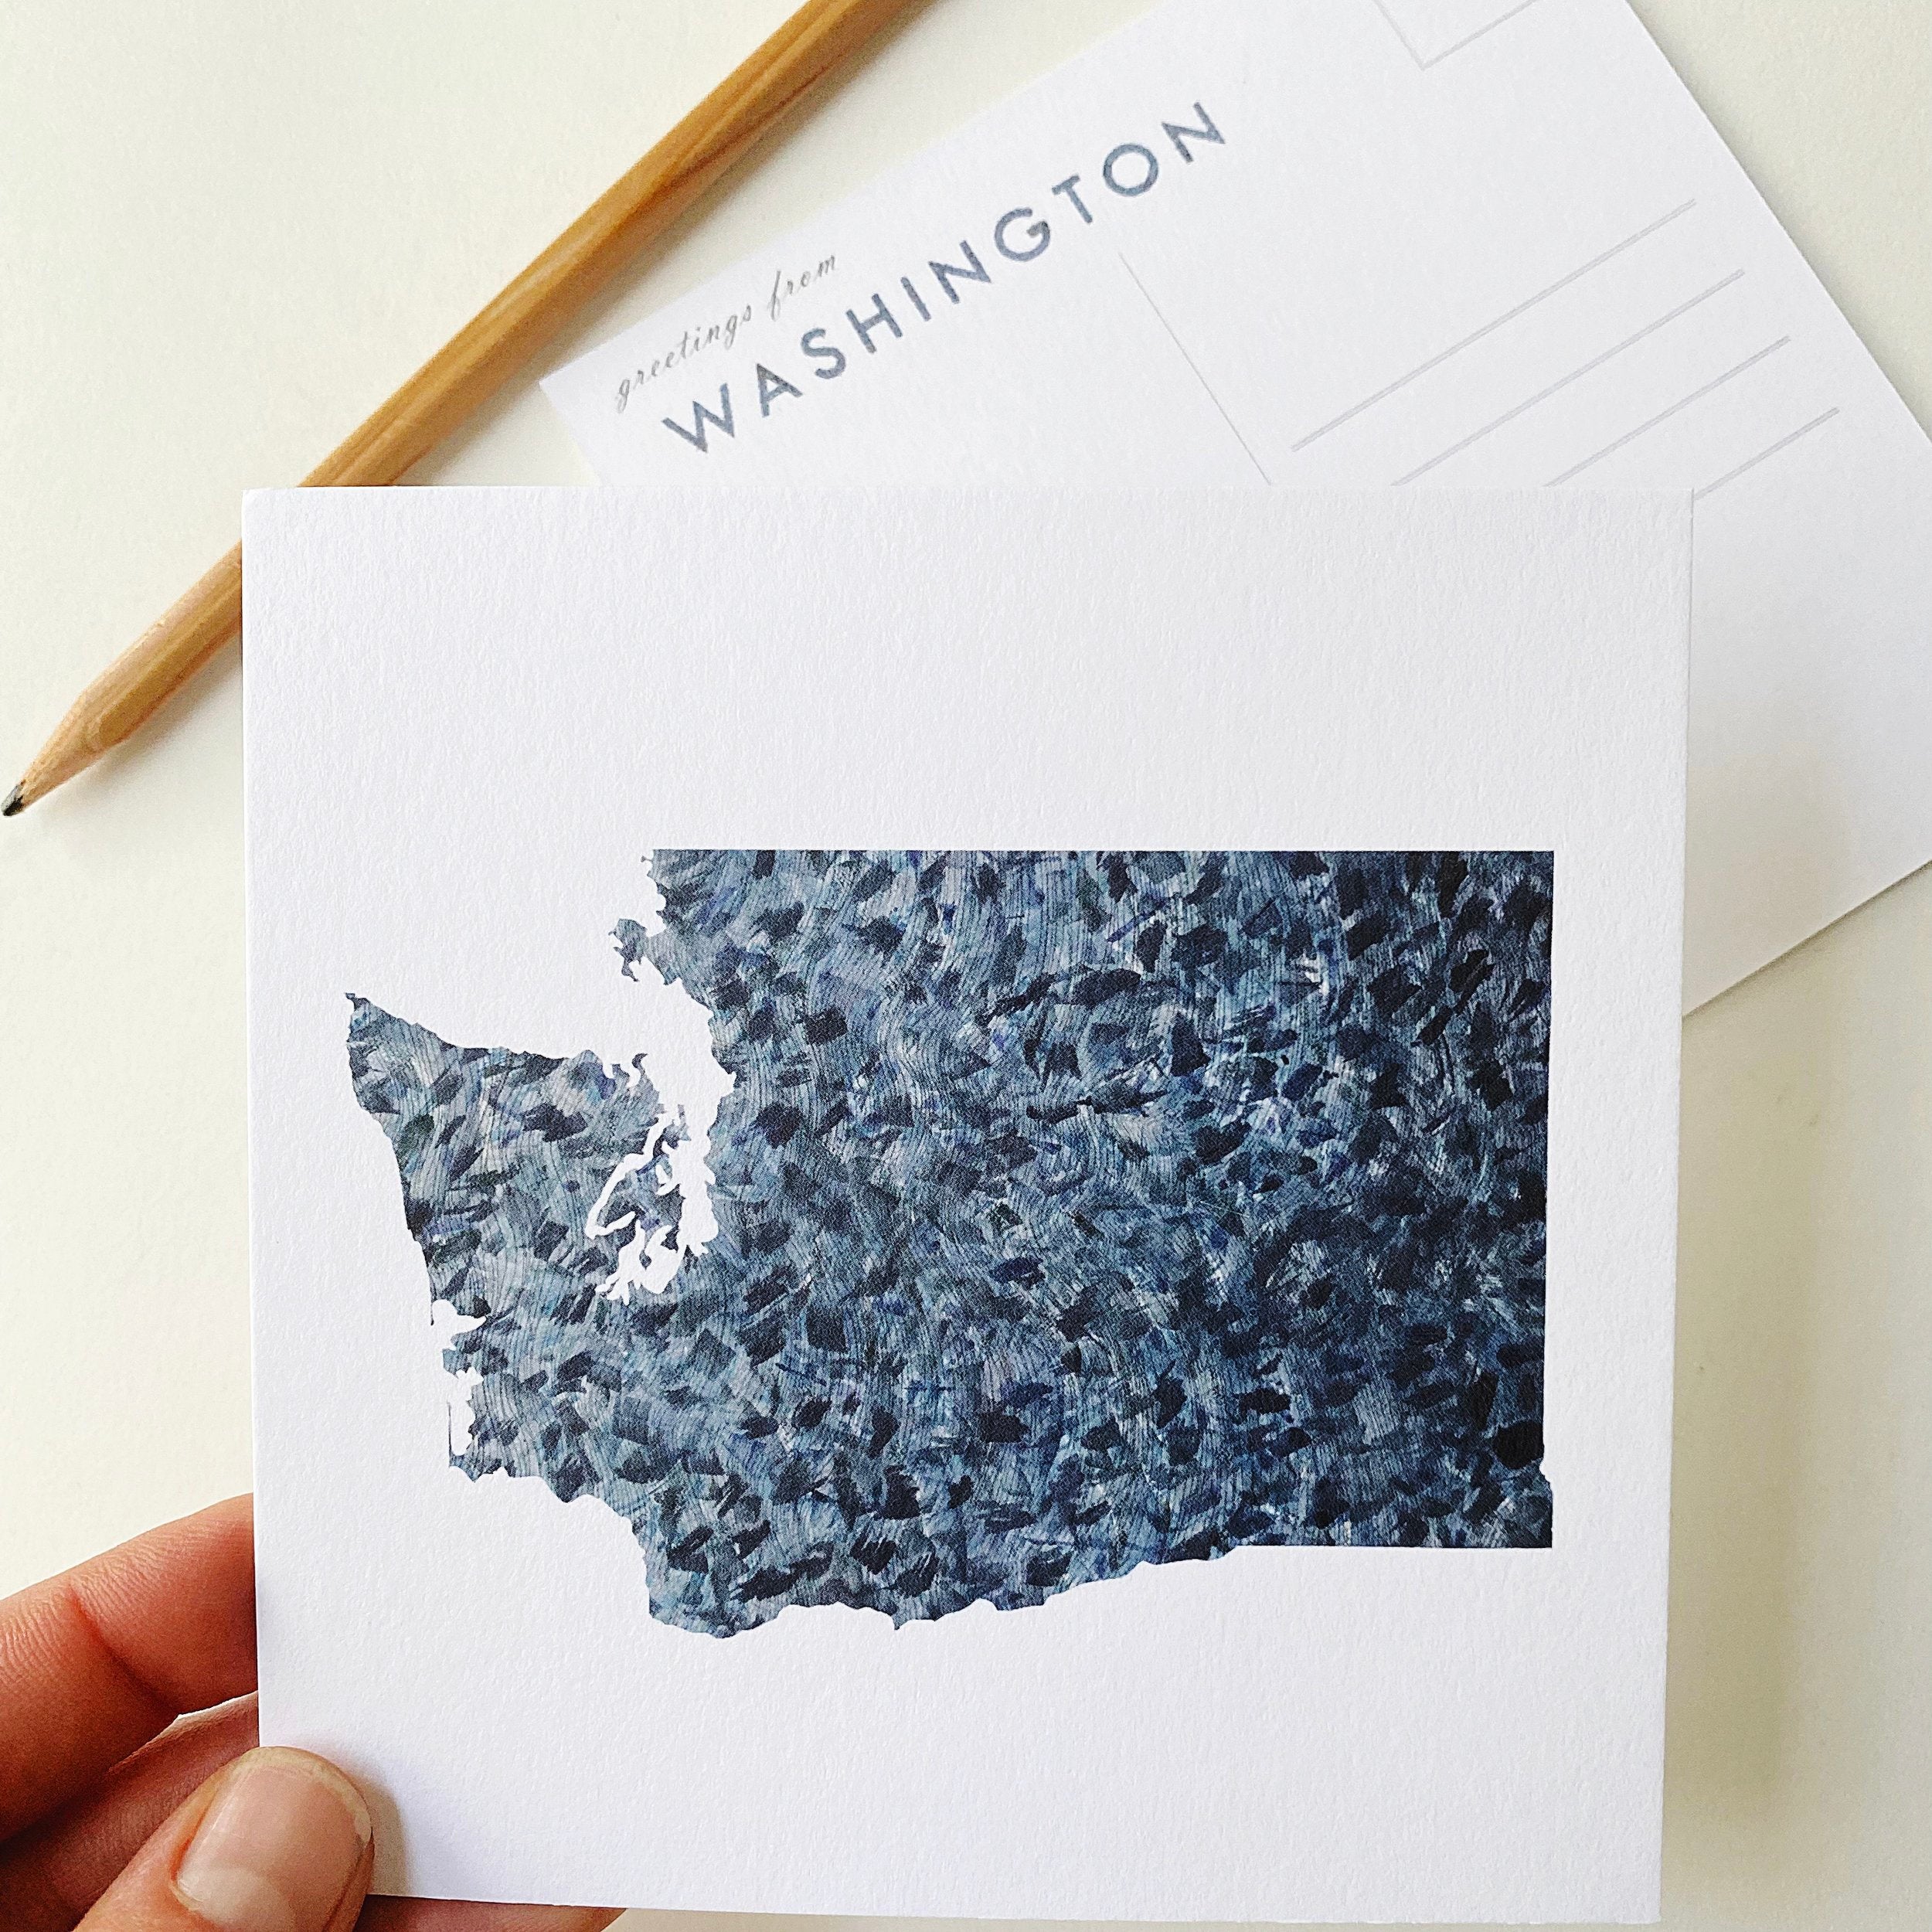 WASHINGTON State Map Postcard